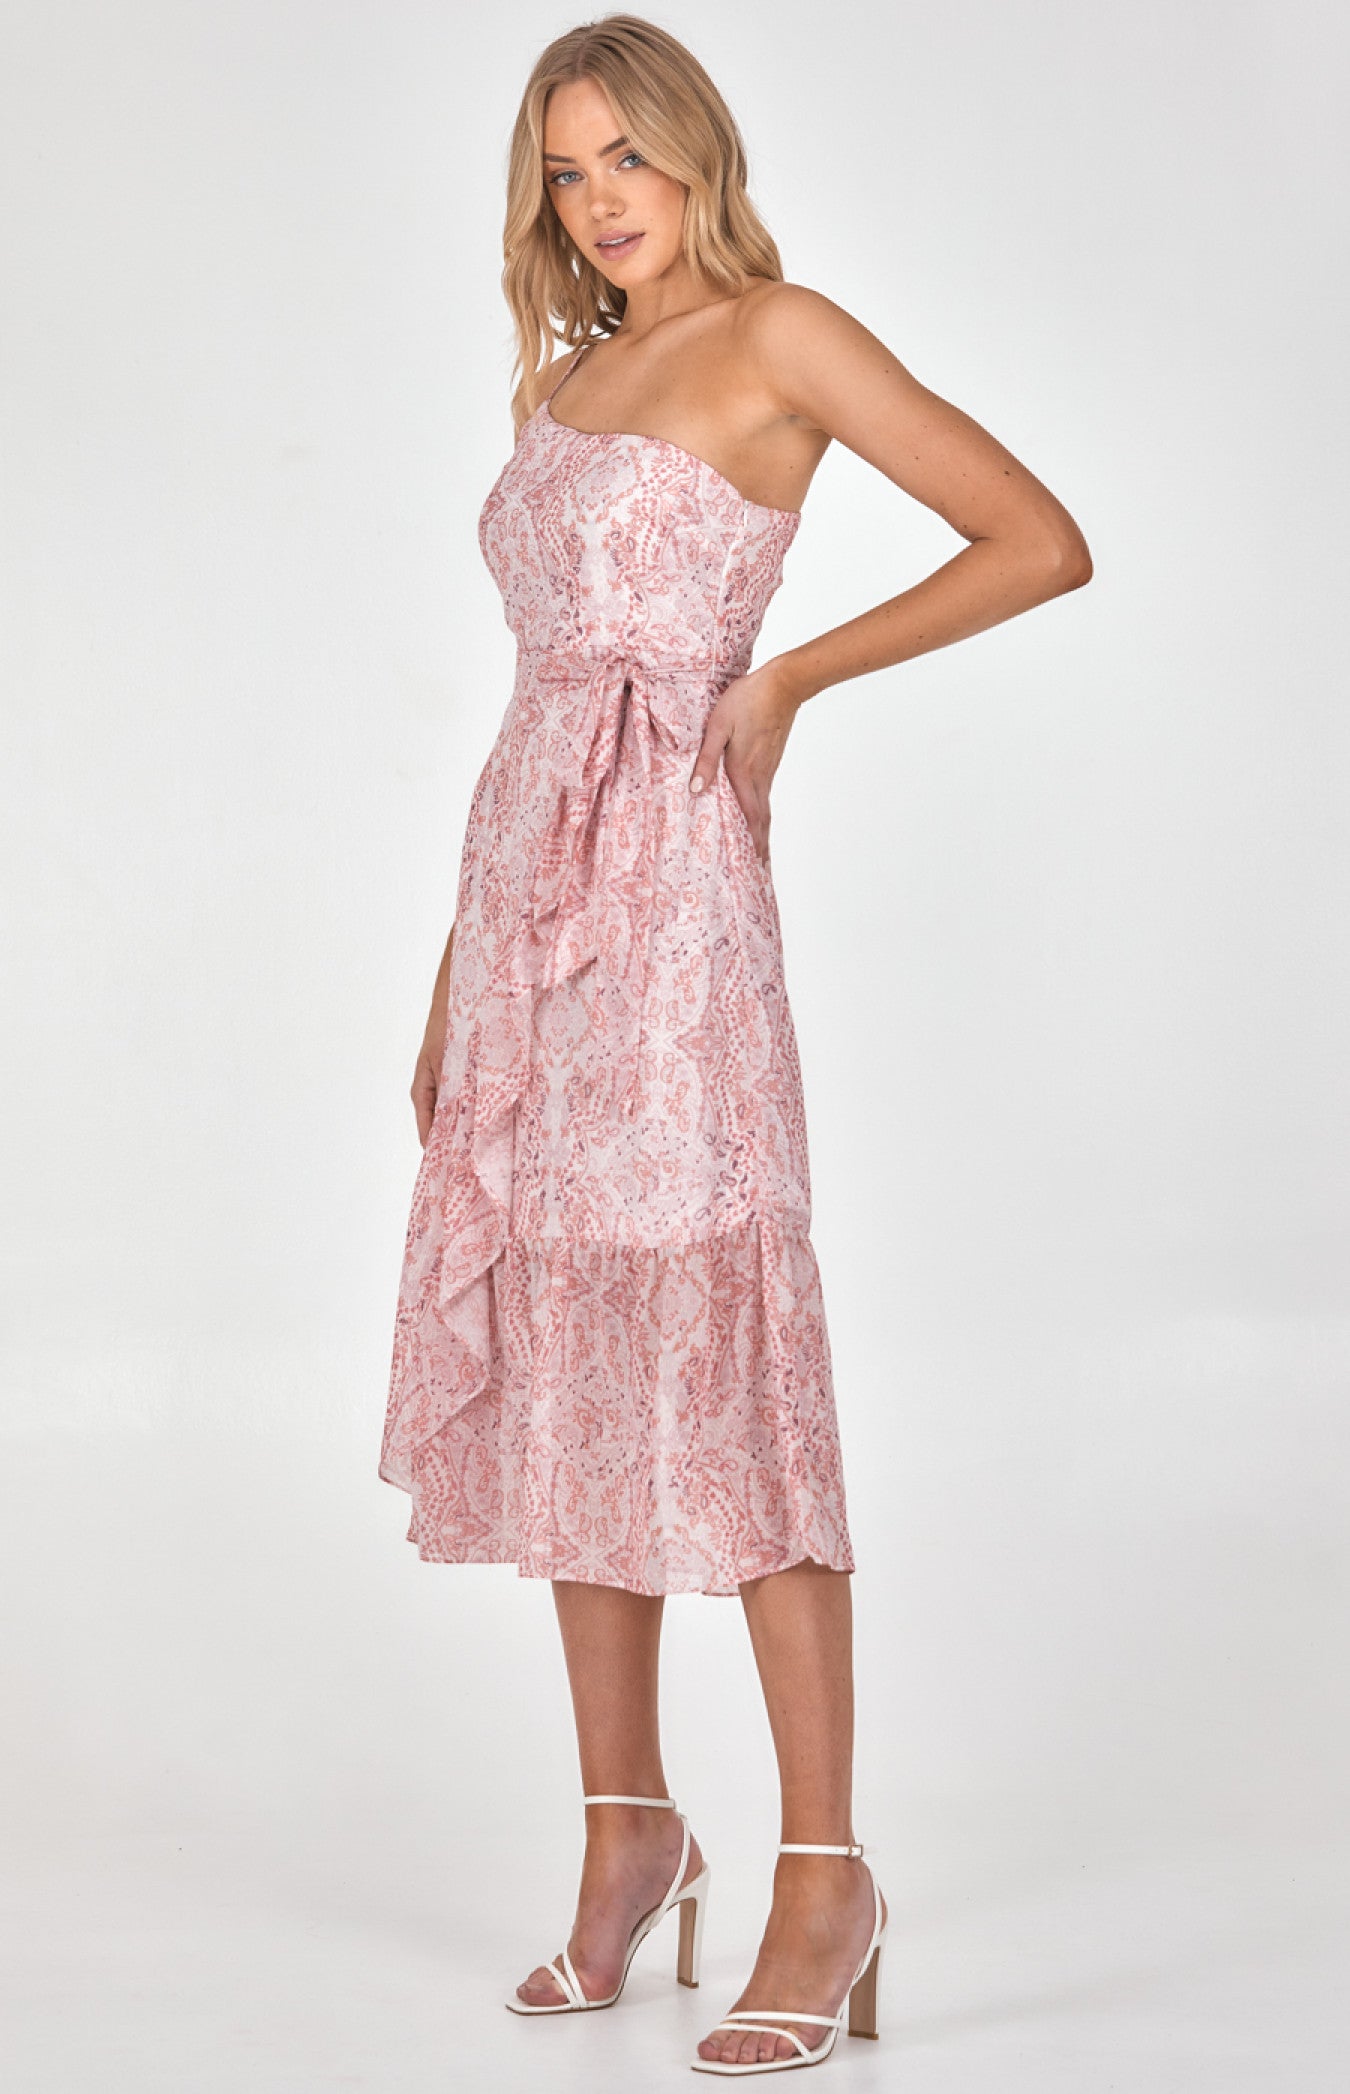 Printed Chiffon One Shoulder Dress with Frill Detail Hem - Printed